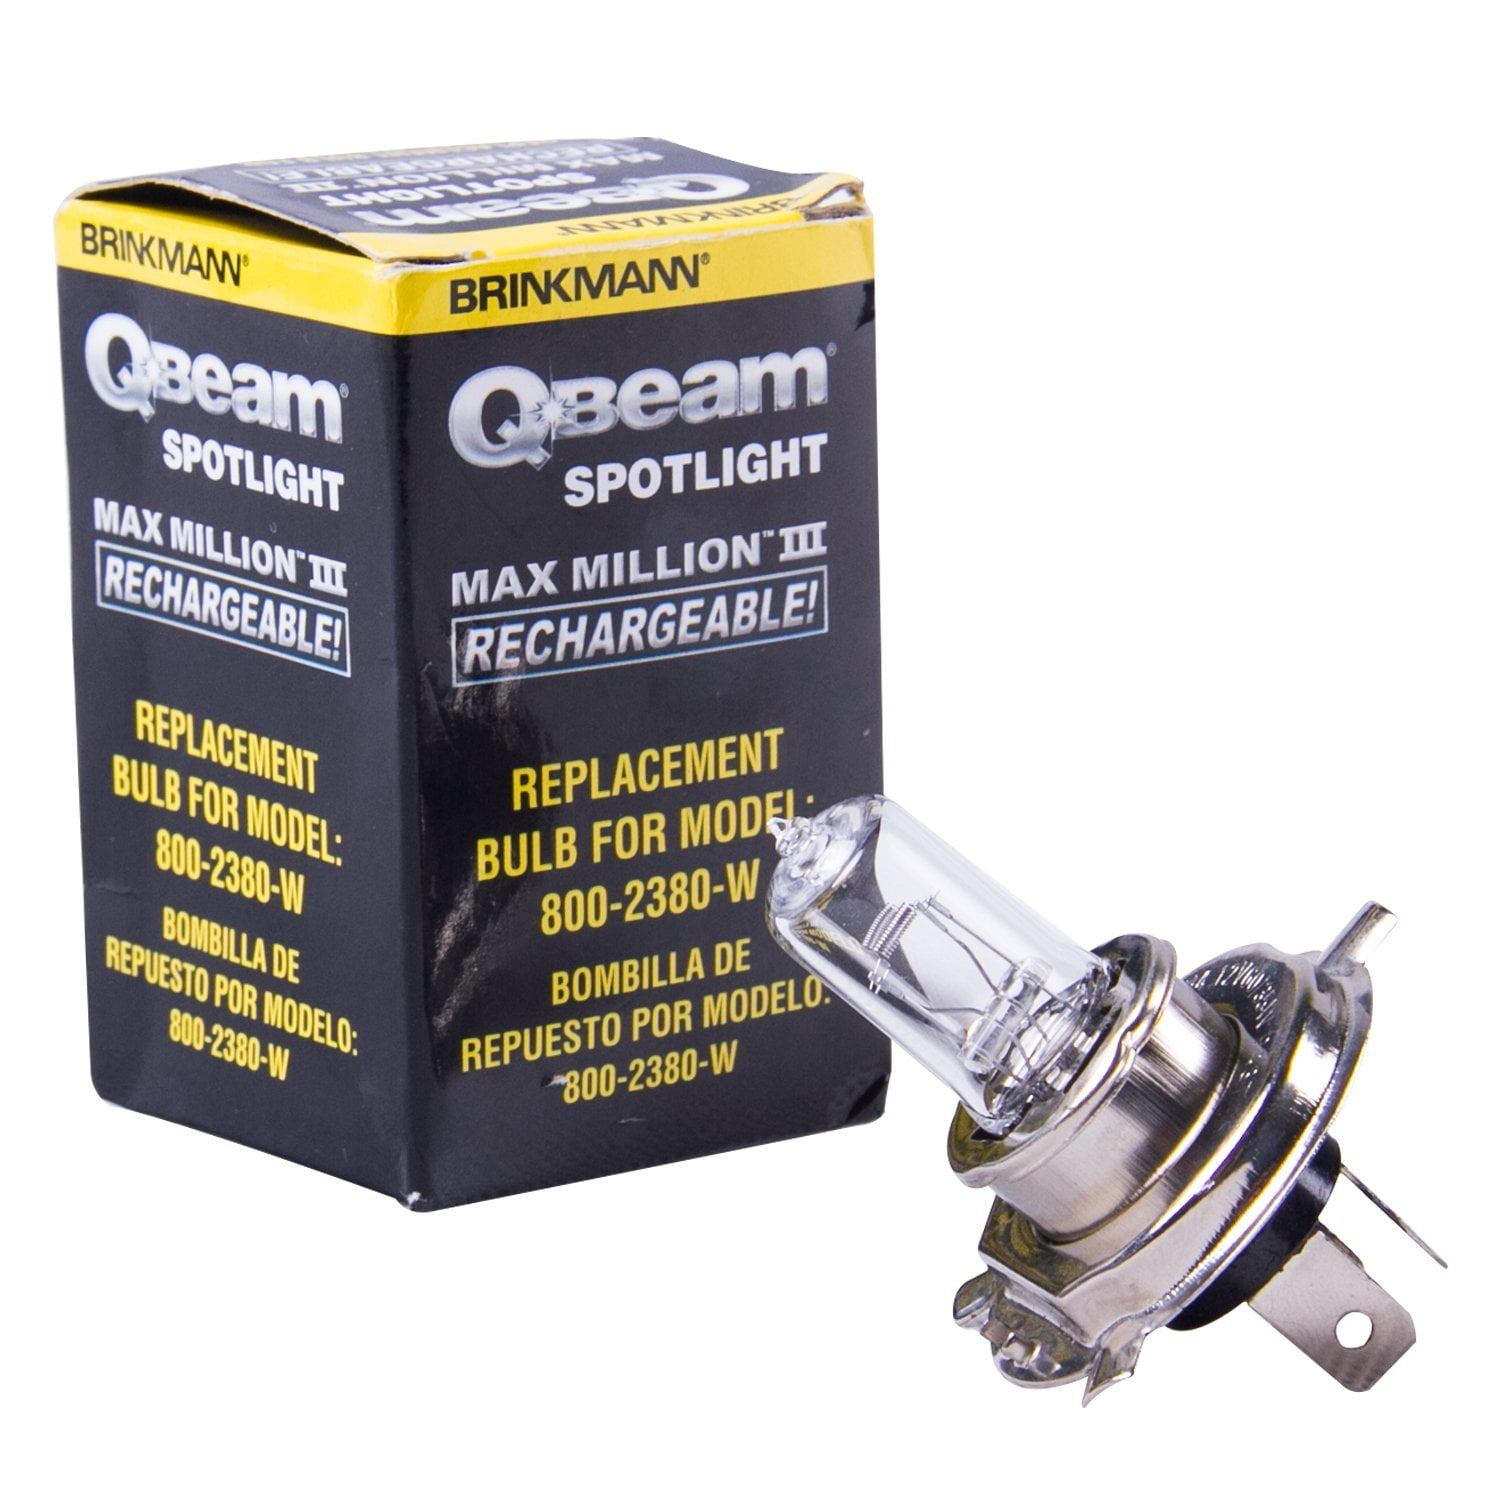 Brinkmann Q-Beam Max Million Spotlight Rechargeable Halogen Replacement Bulb 